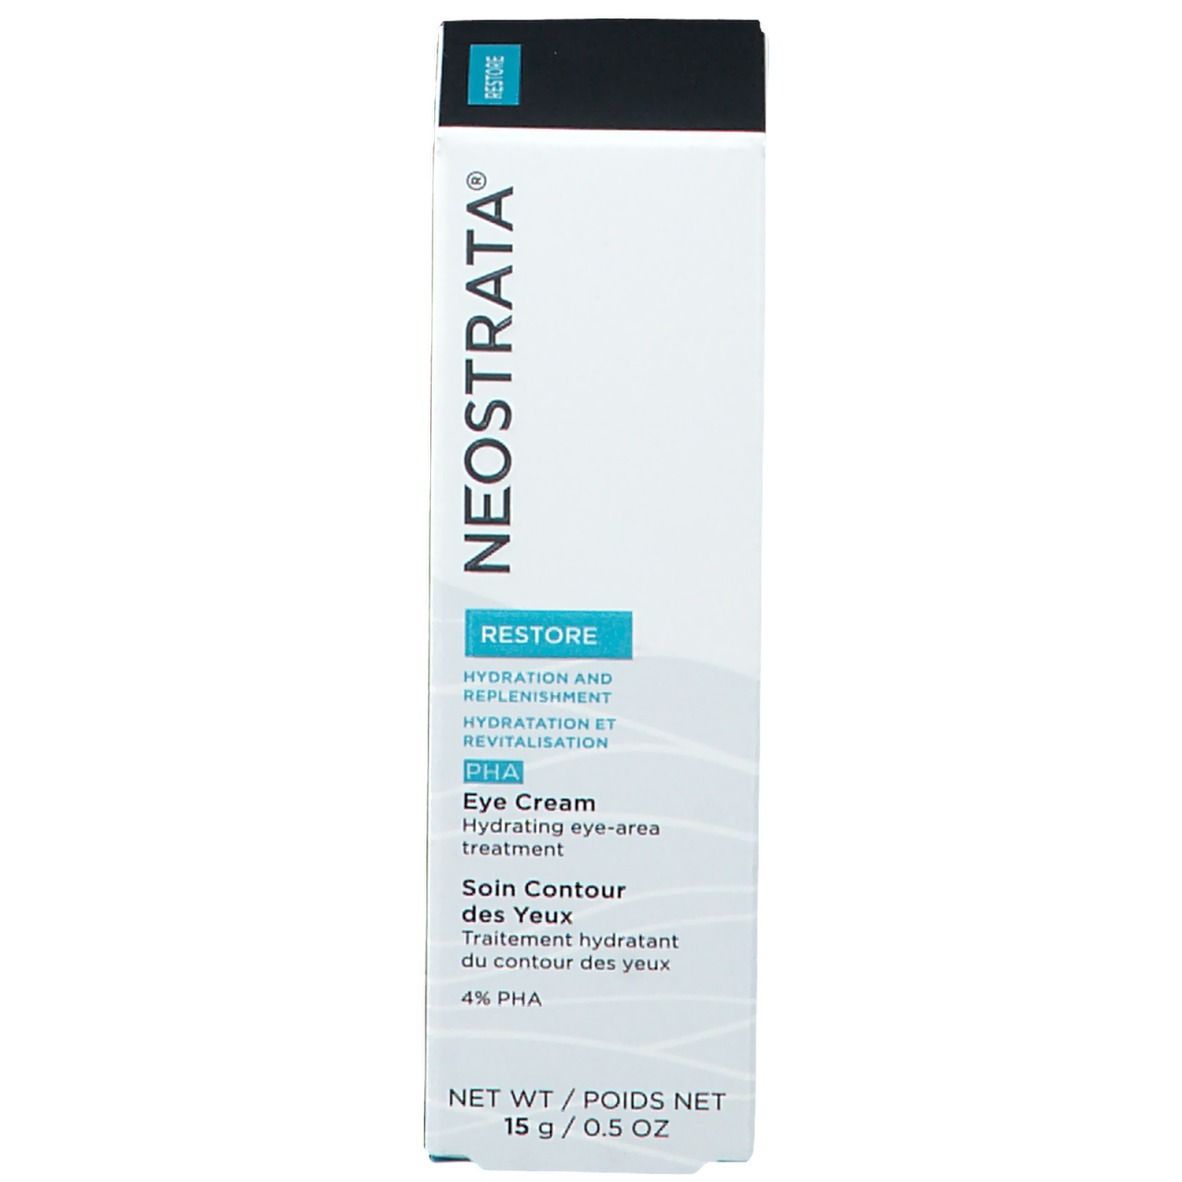 NeoStrata® Restore Eye Cream 4 PHA